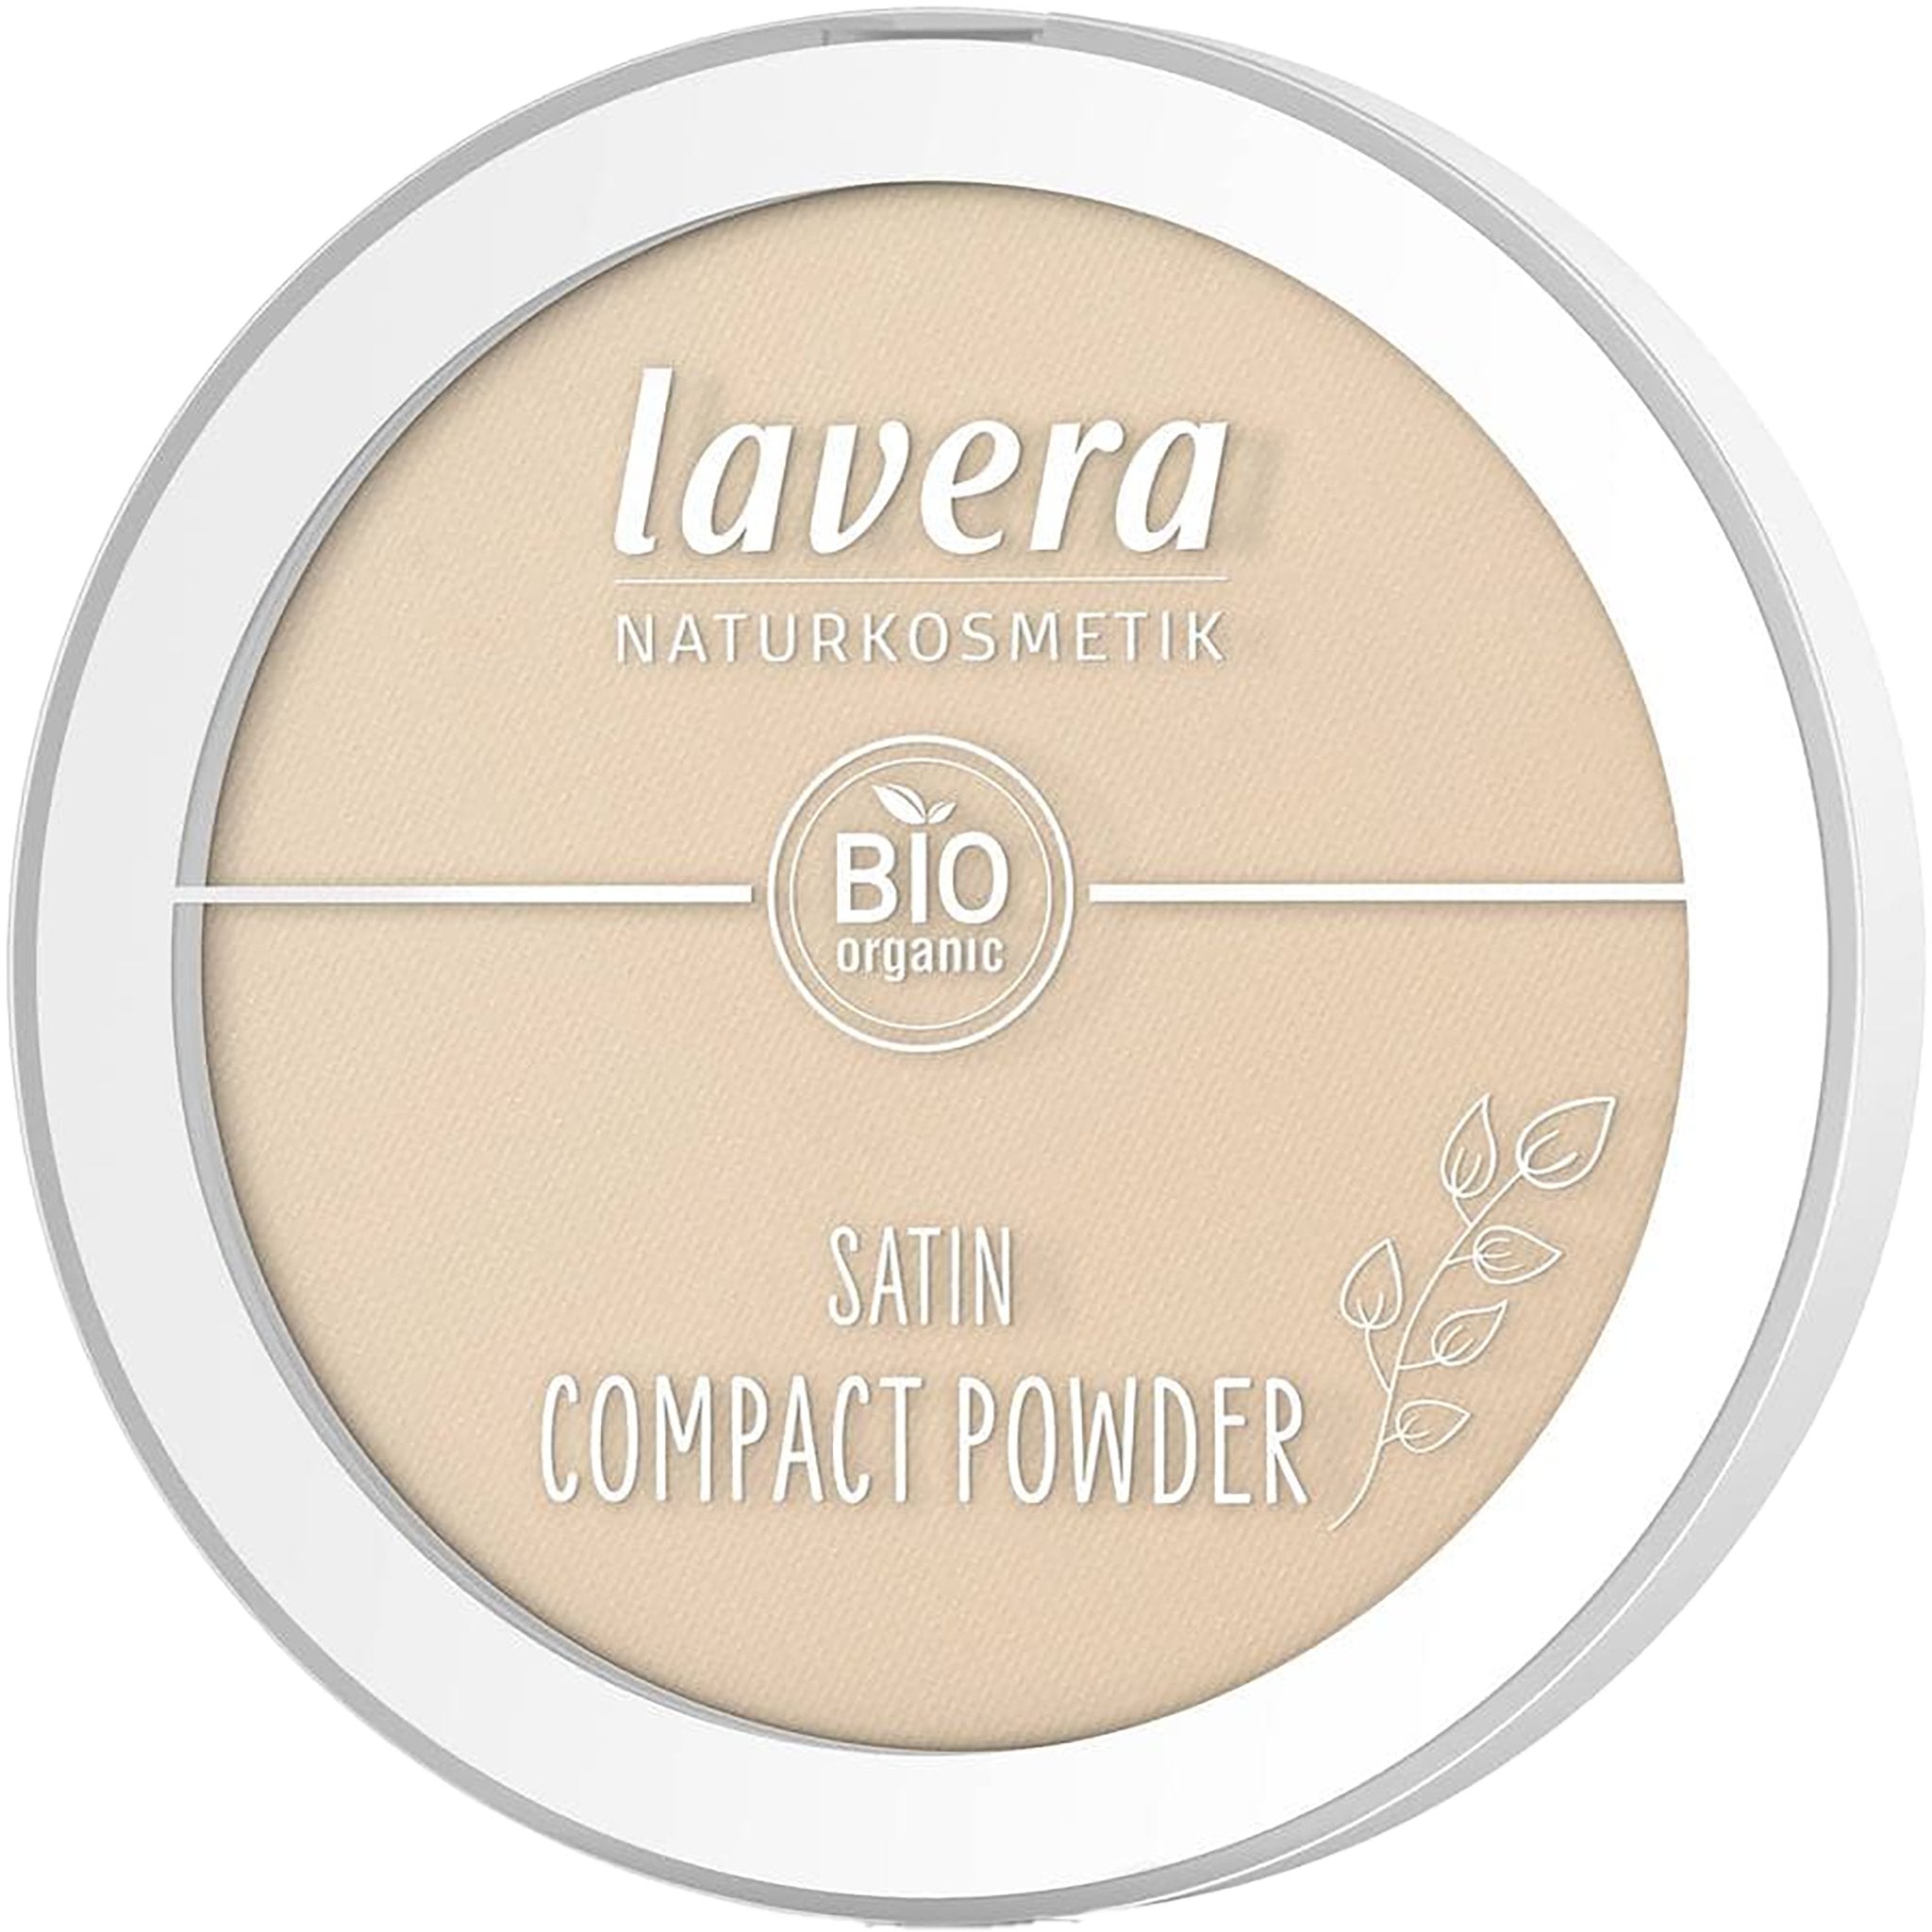 Satin Compact Powder - mypure.co.uk